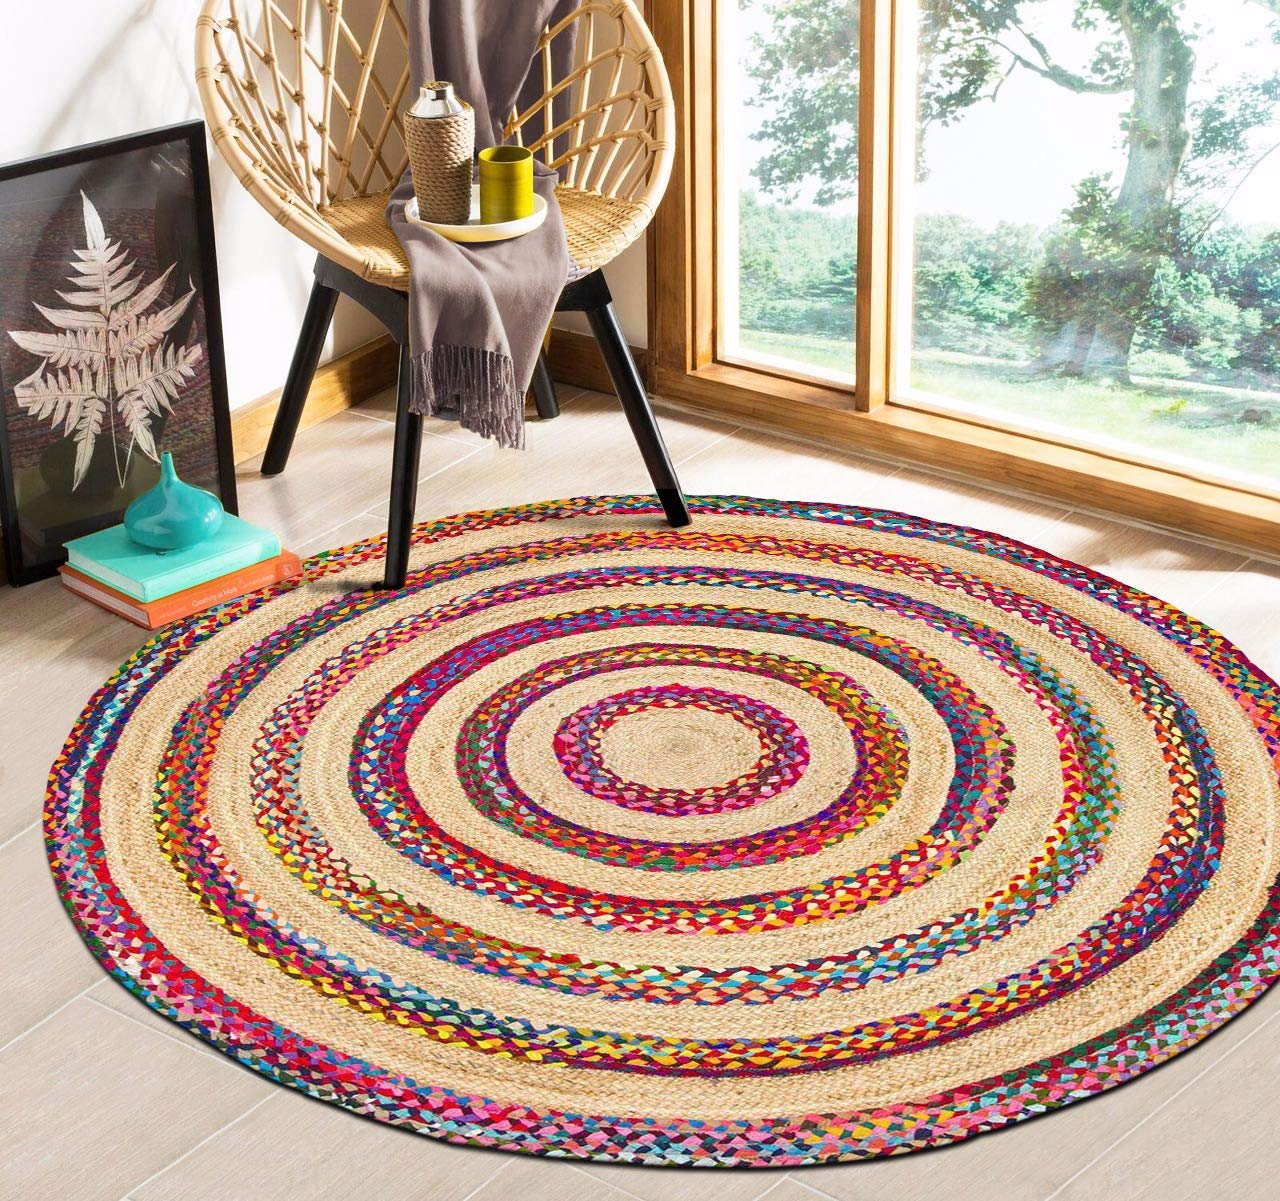 The Home Talk Jute and Cotton Braided Floor Rug, Boho Design (4 Feet Round)